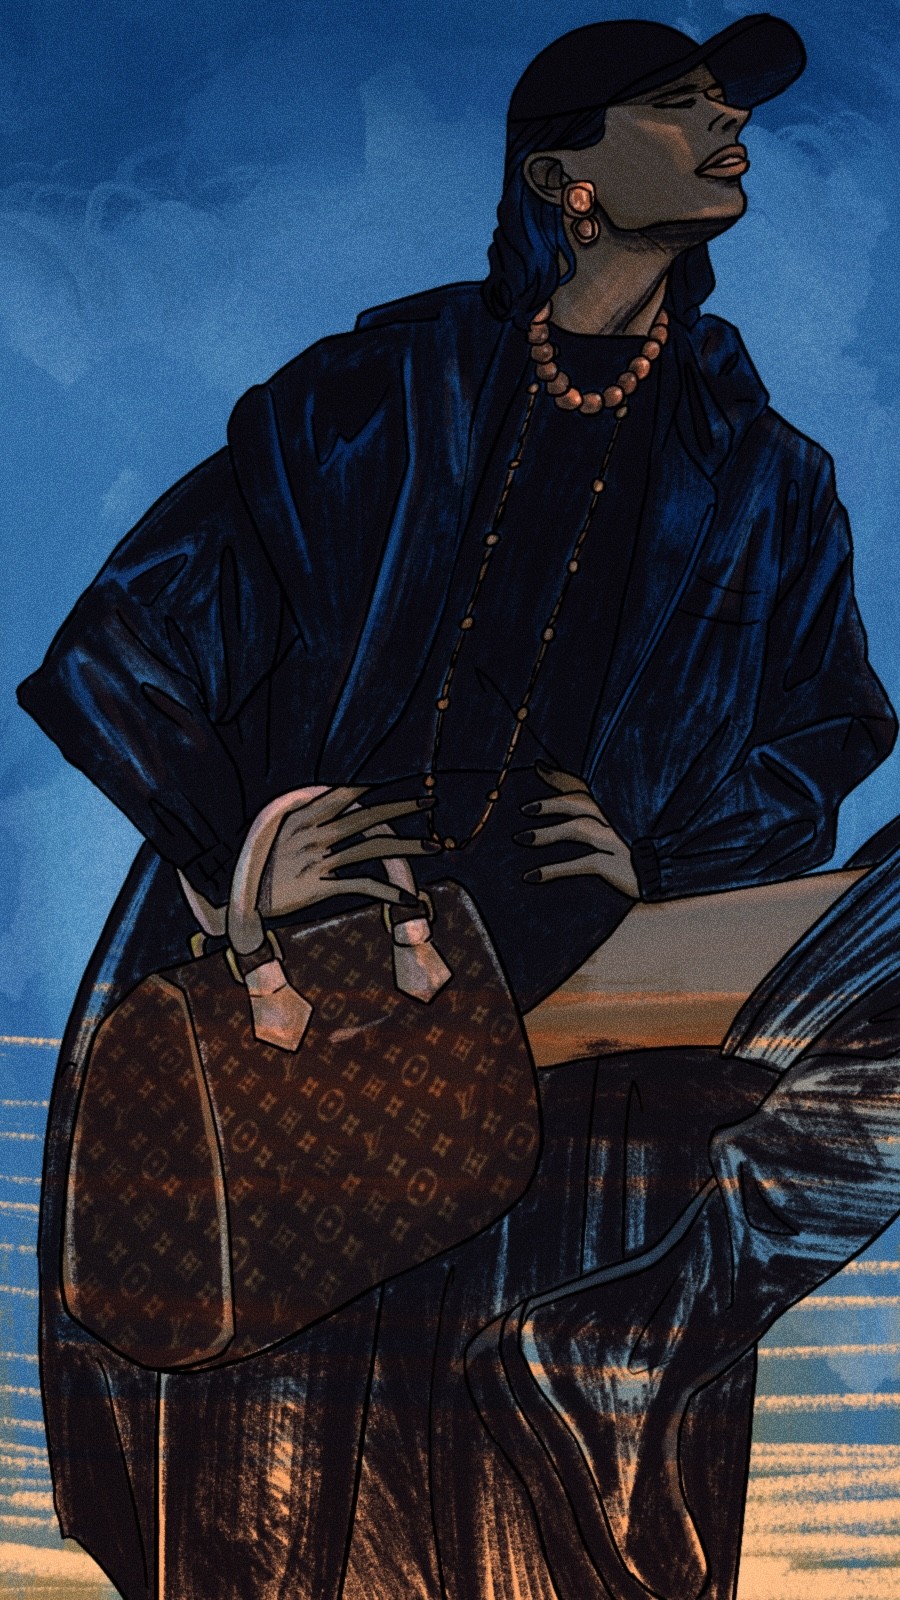 Louis Vuitton Oxford Bag